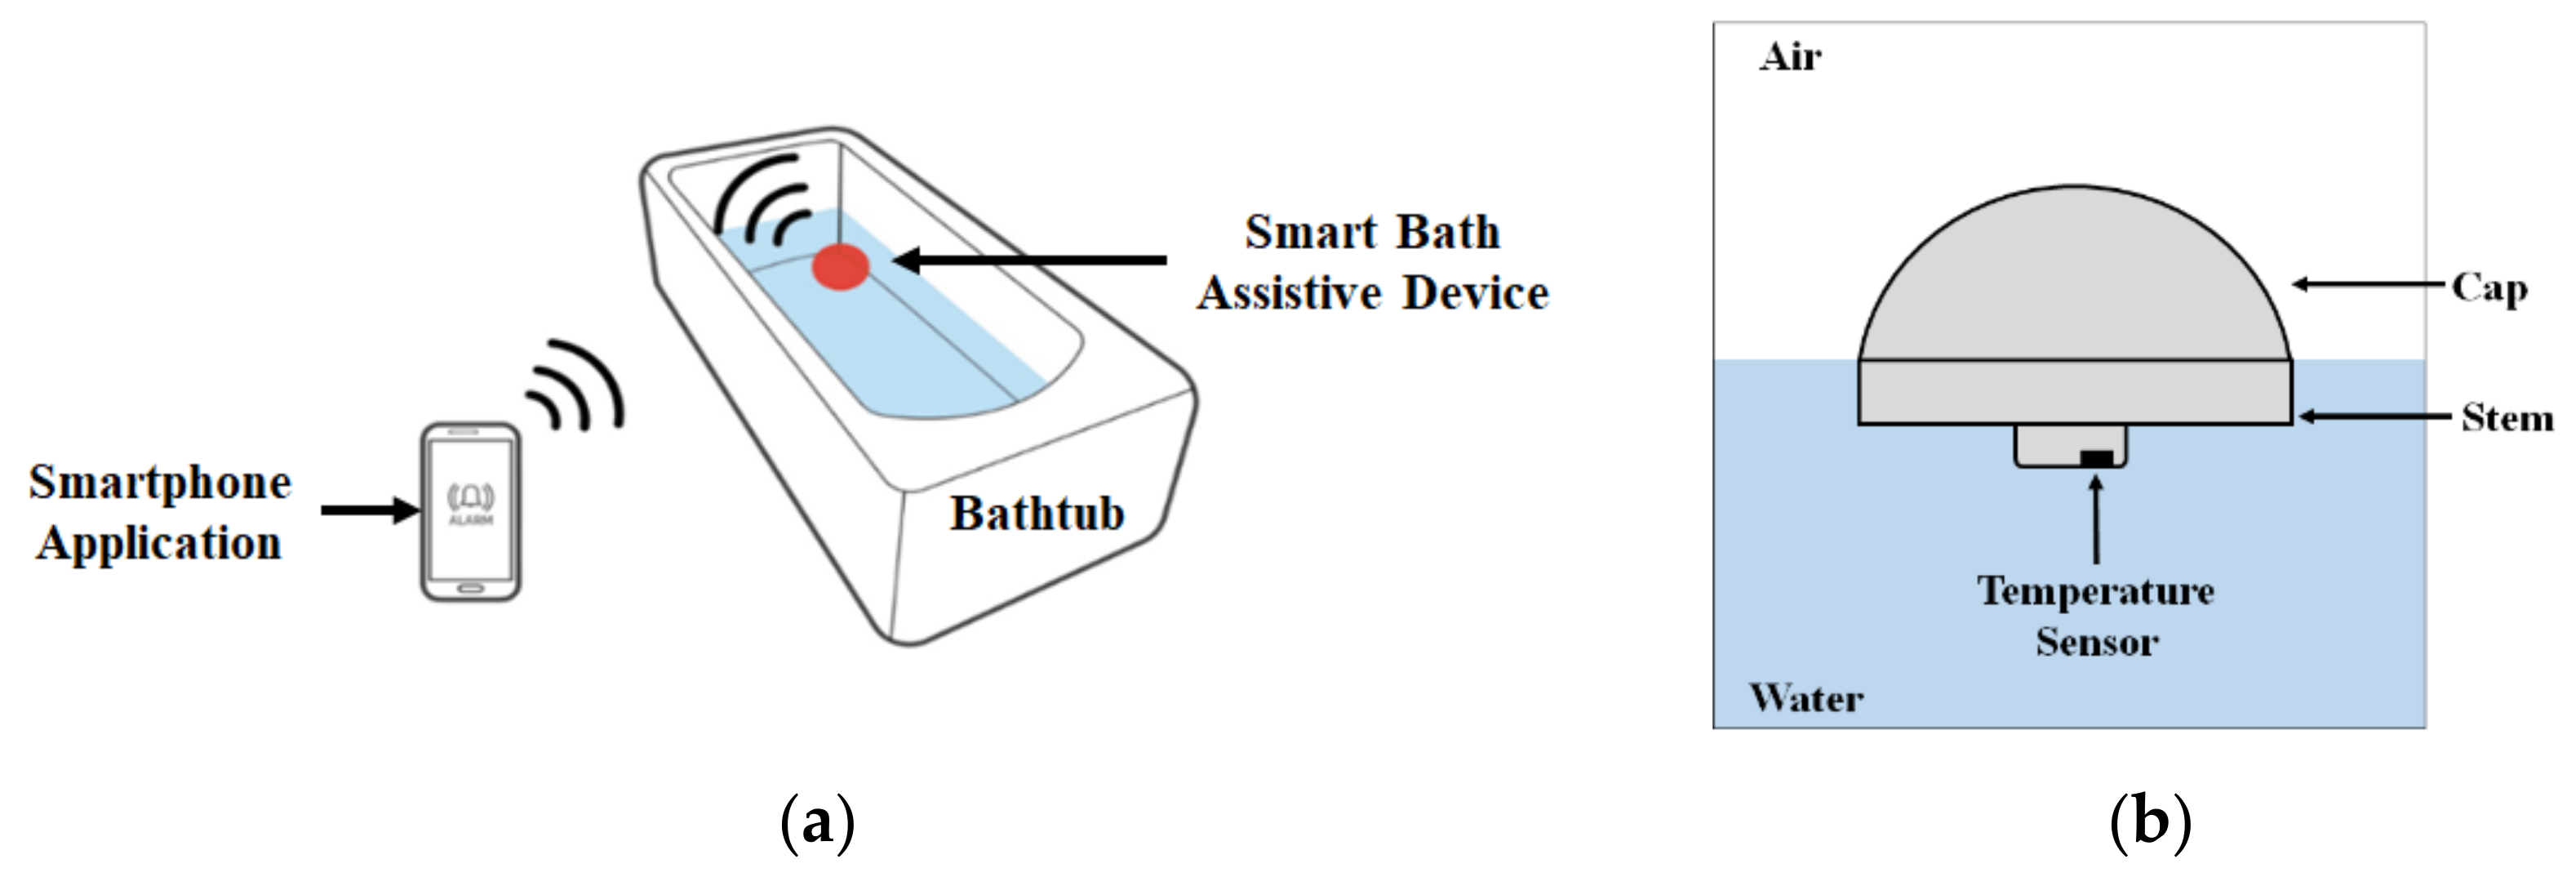 Designing A Smart Bath Assistive Device, Bathtub Assistive Devices